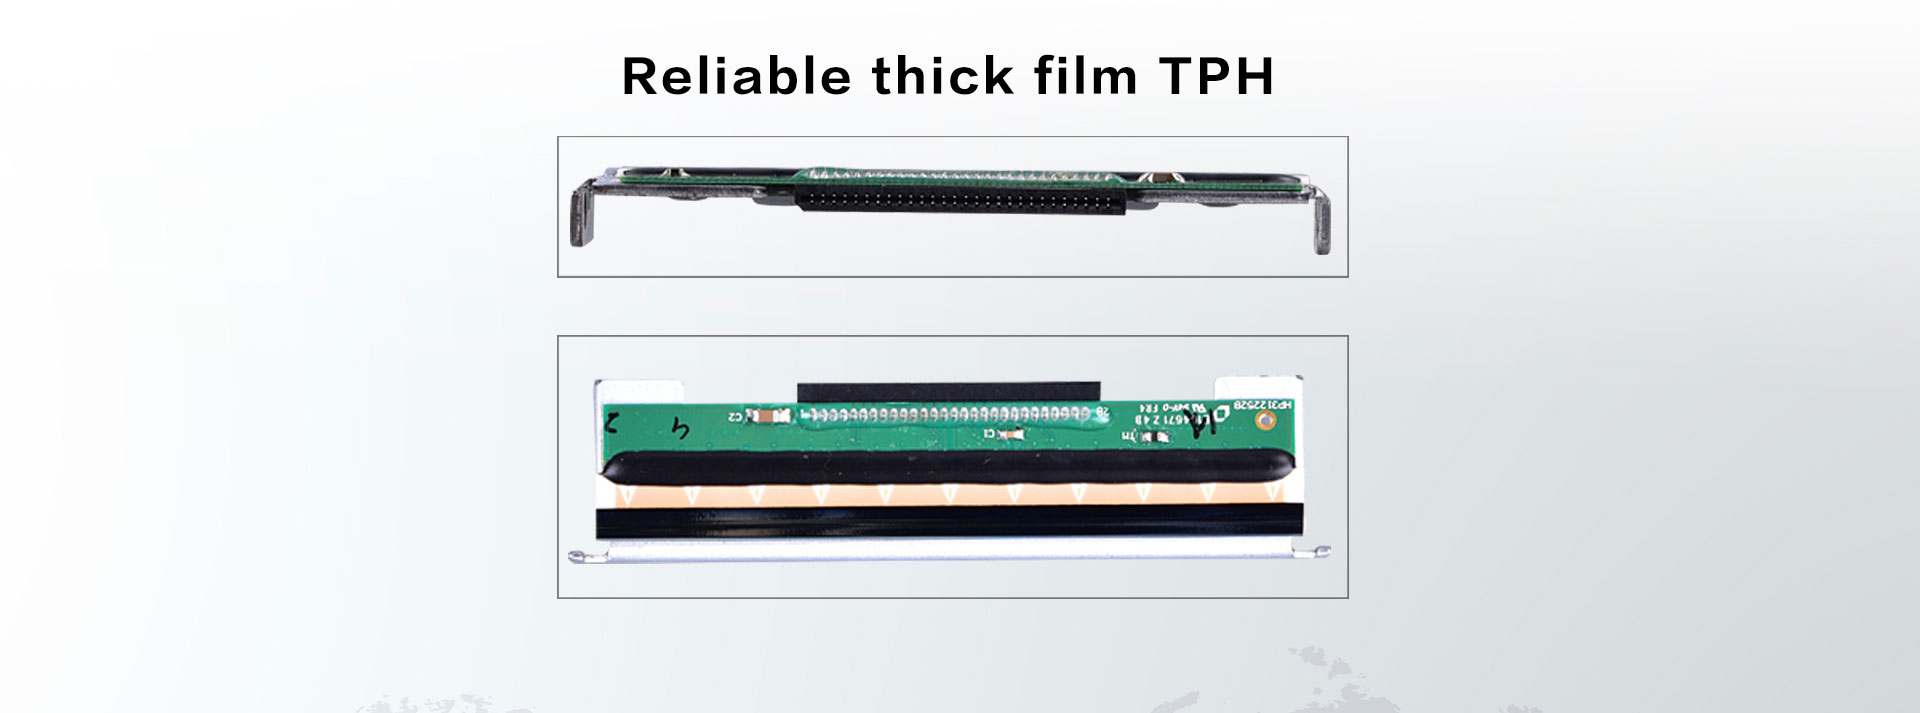 POS printer TP806 thick film TPH